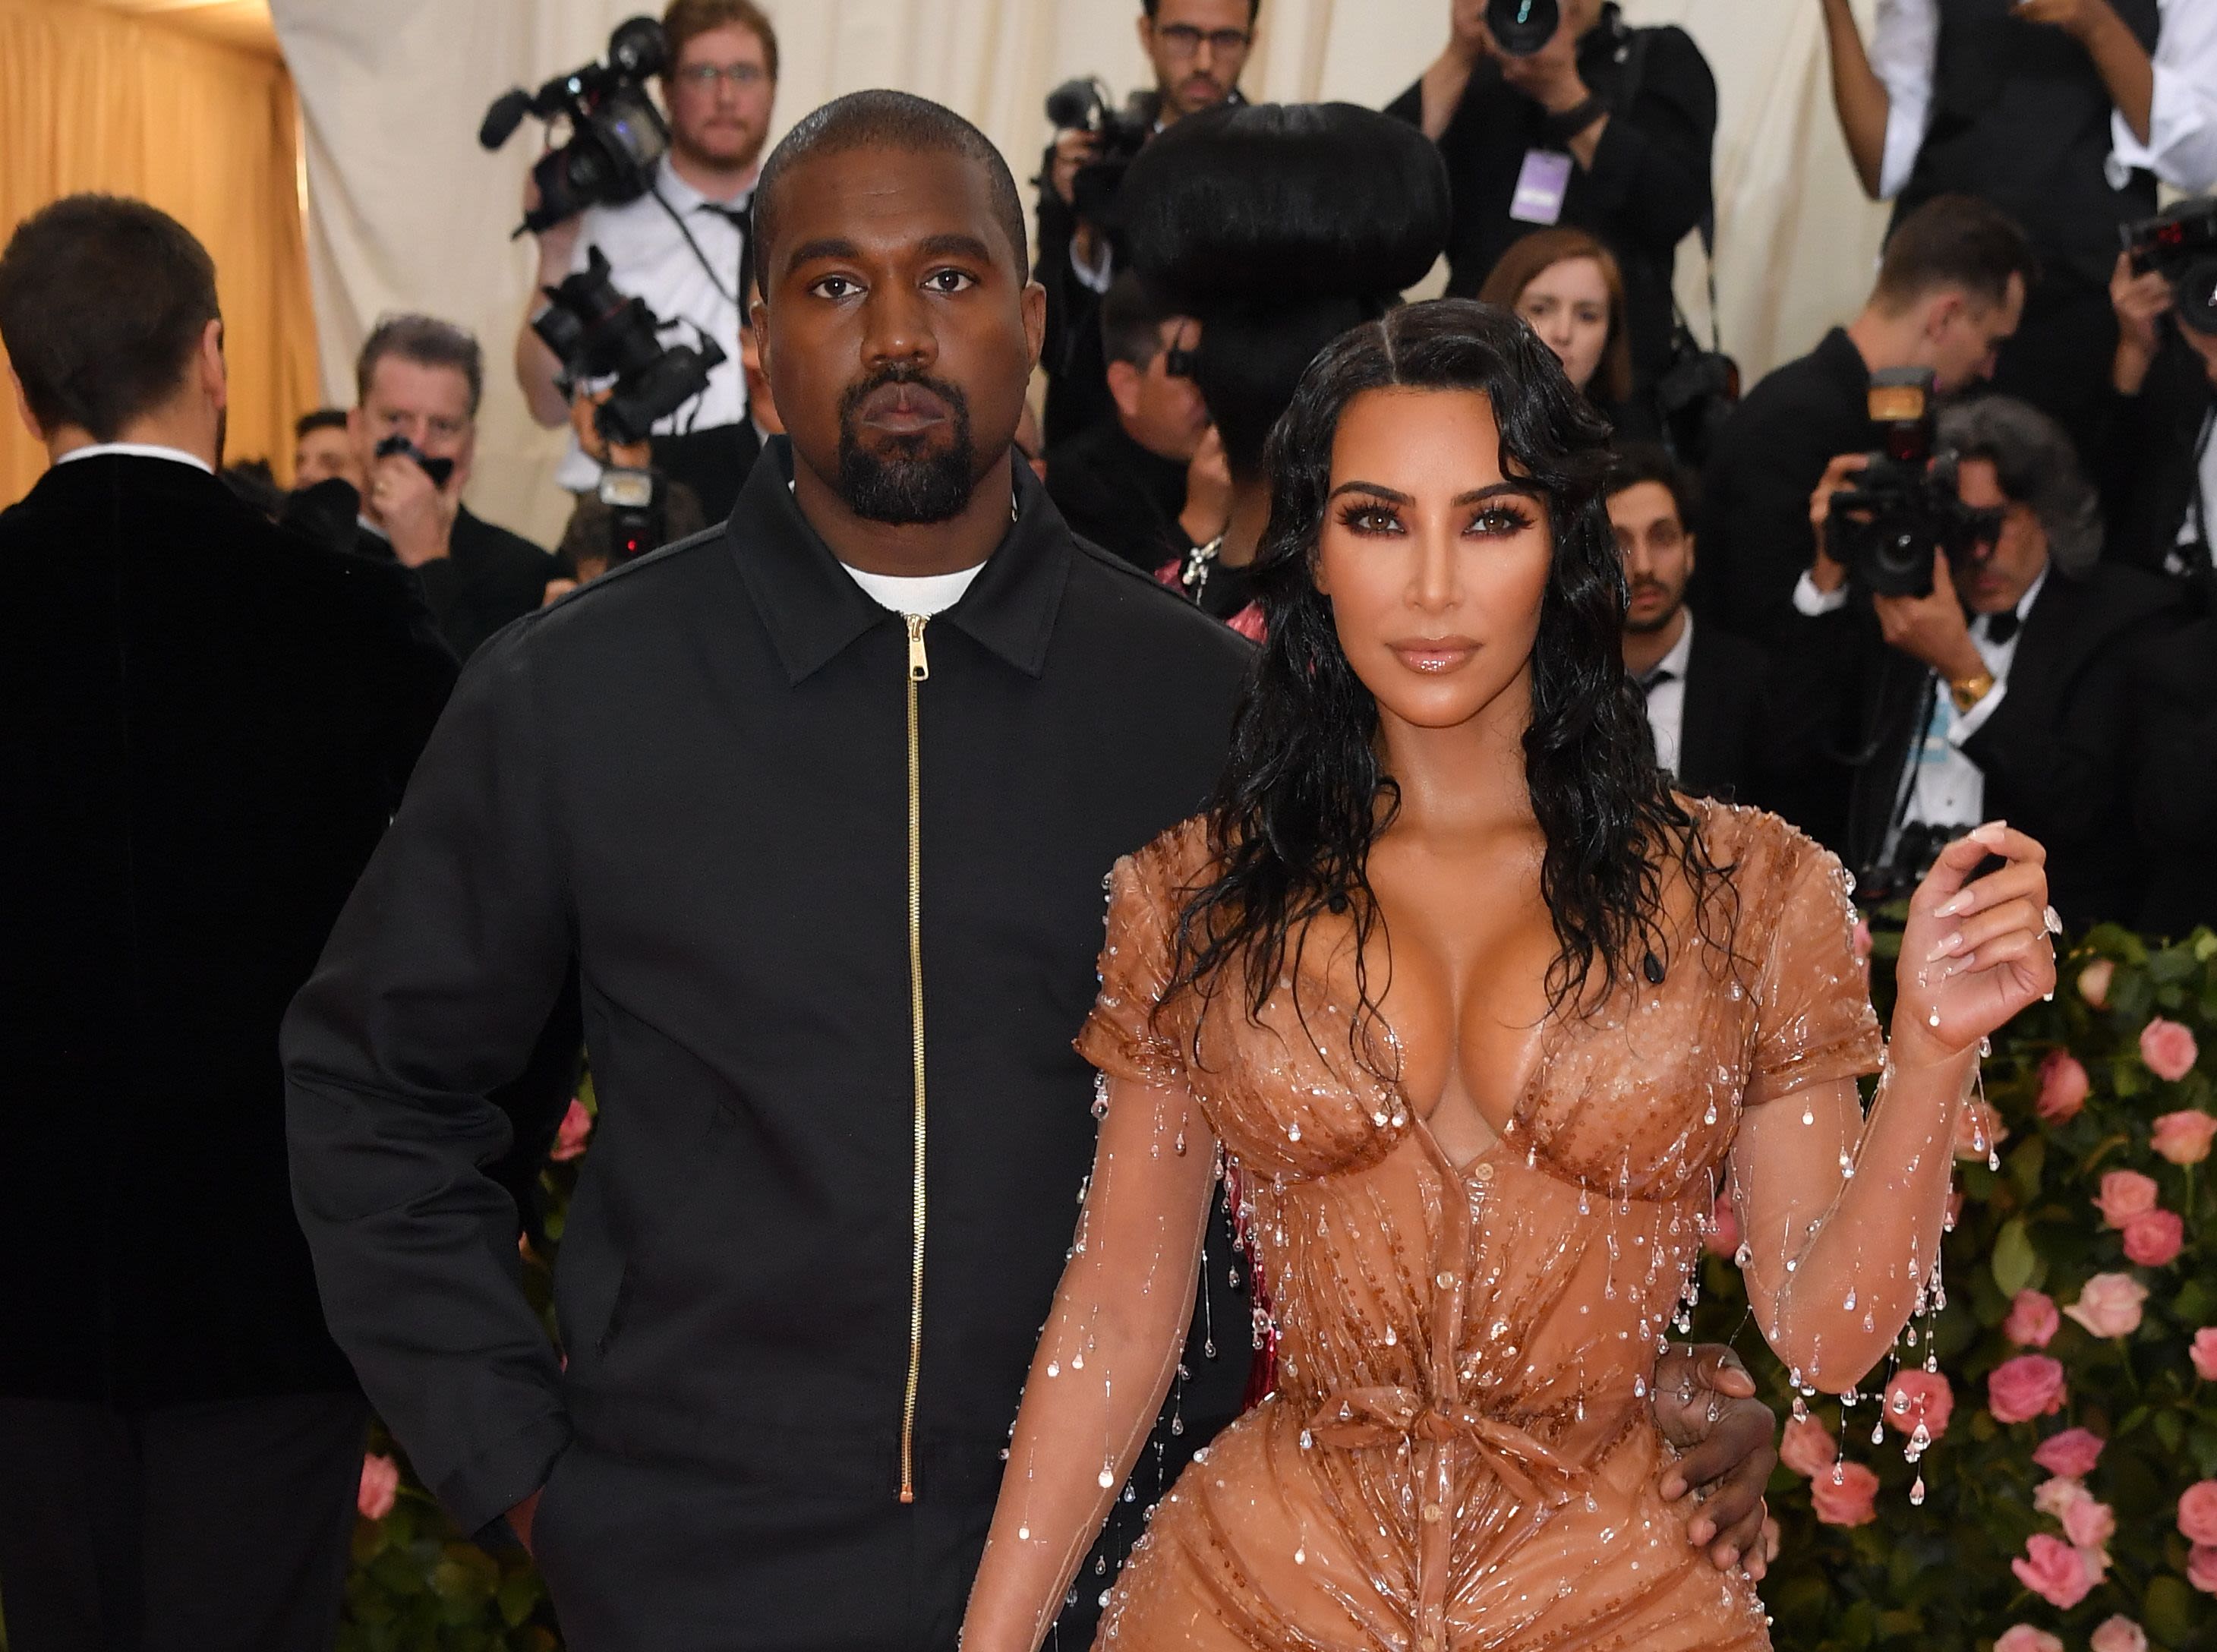 Who was with Kim Kardashian at the Met Gala?